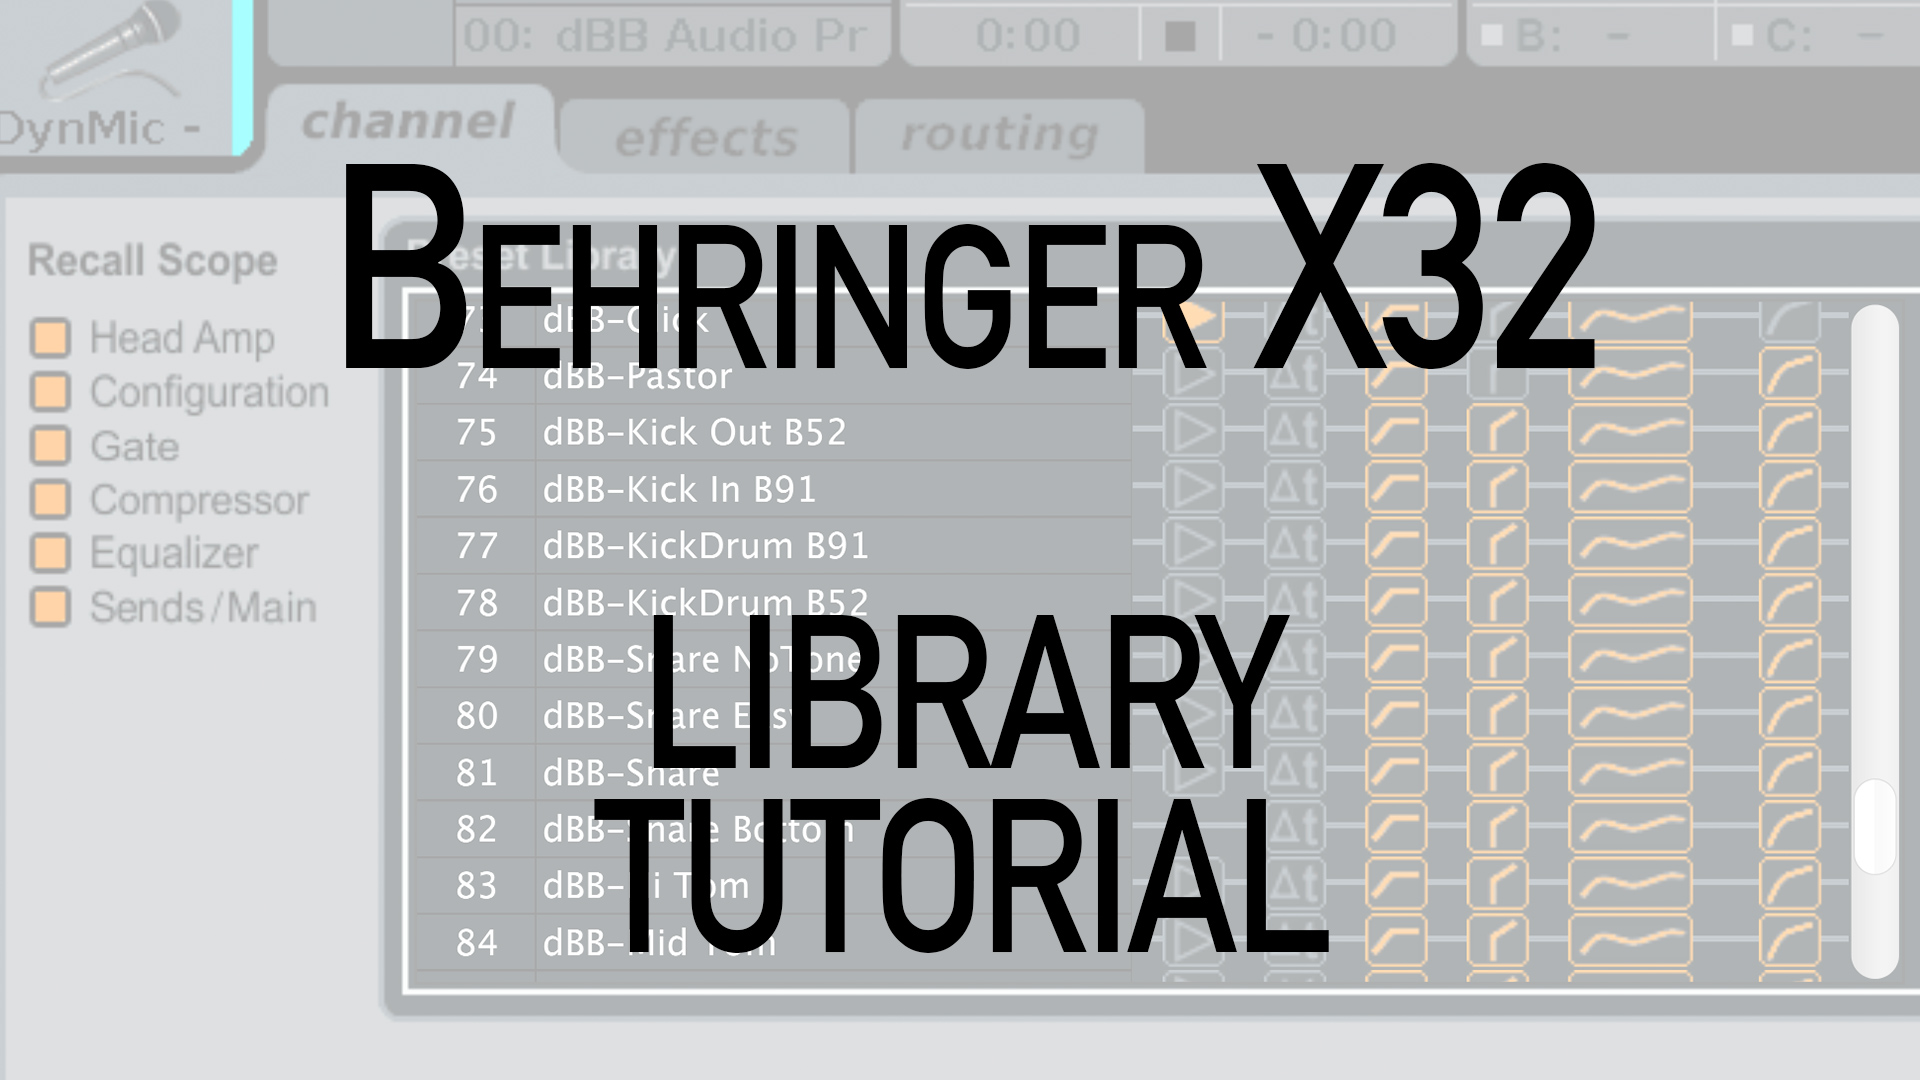 Sidechain компрессия Behringer x32. X32 Effects. Приложение для Берингер х 32. Behringer x32 Rack инструкция на русском. Channel effects